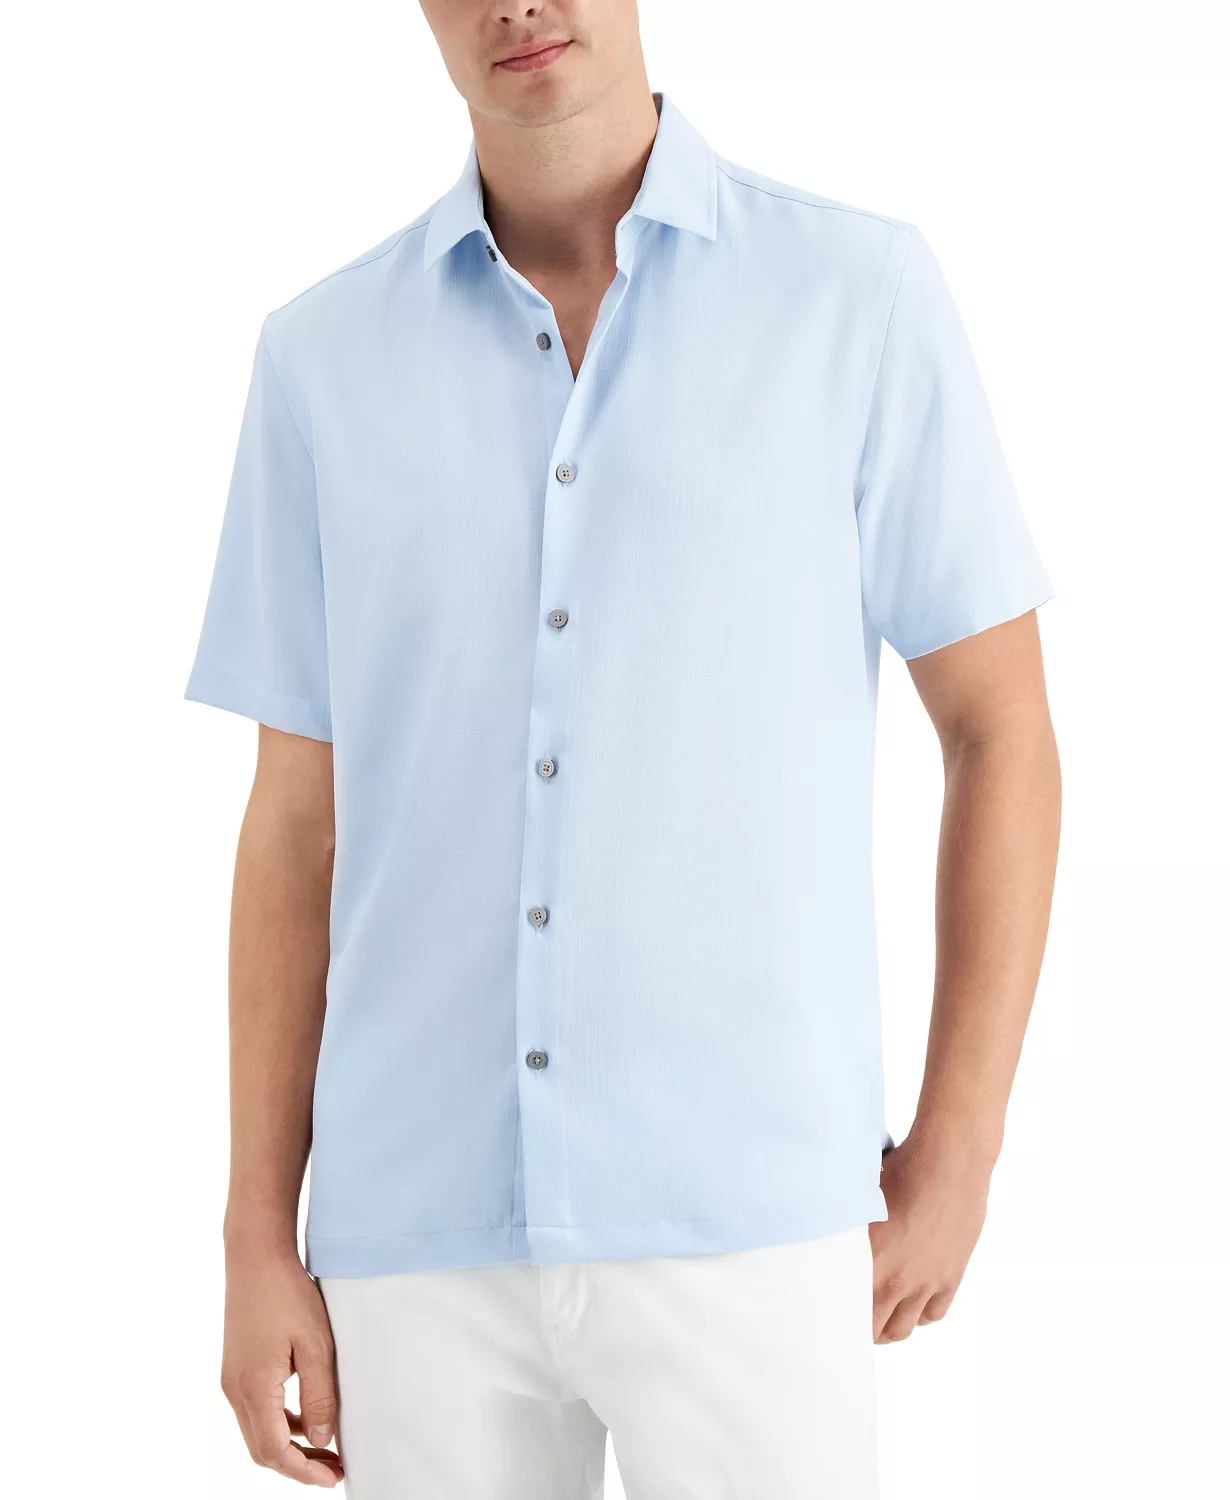 Macy’s: Alfani Men’s Solid Short Sleeve Shirts $6.96